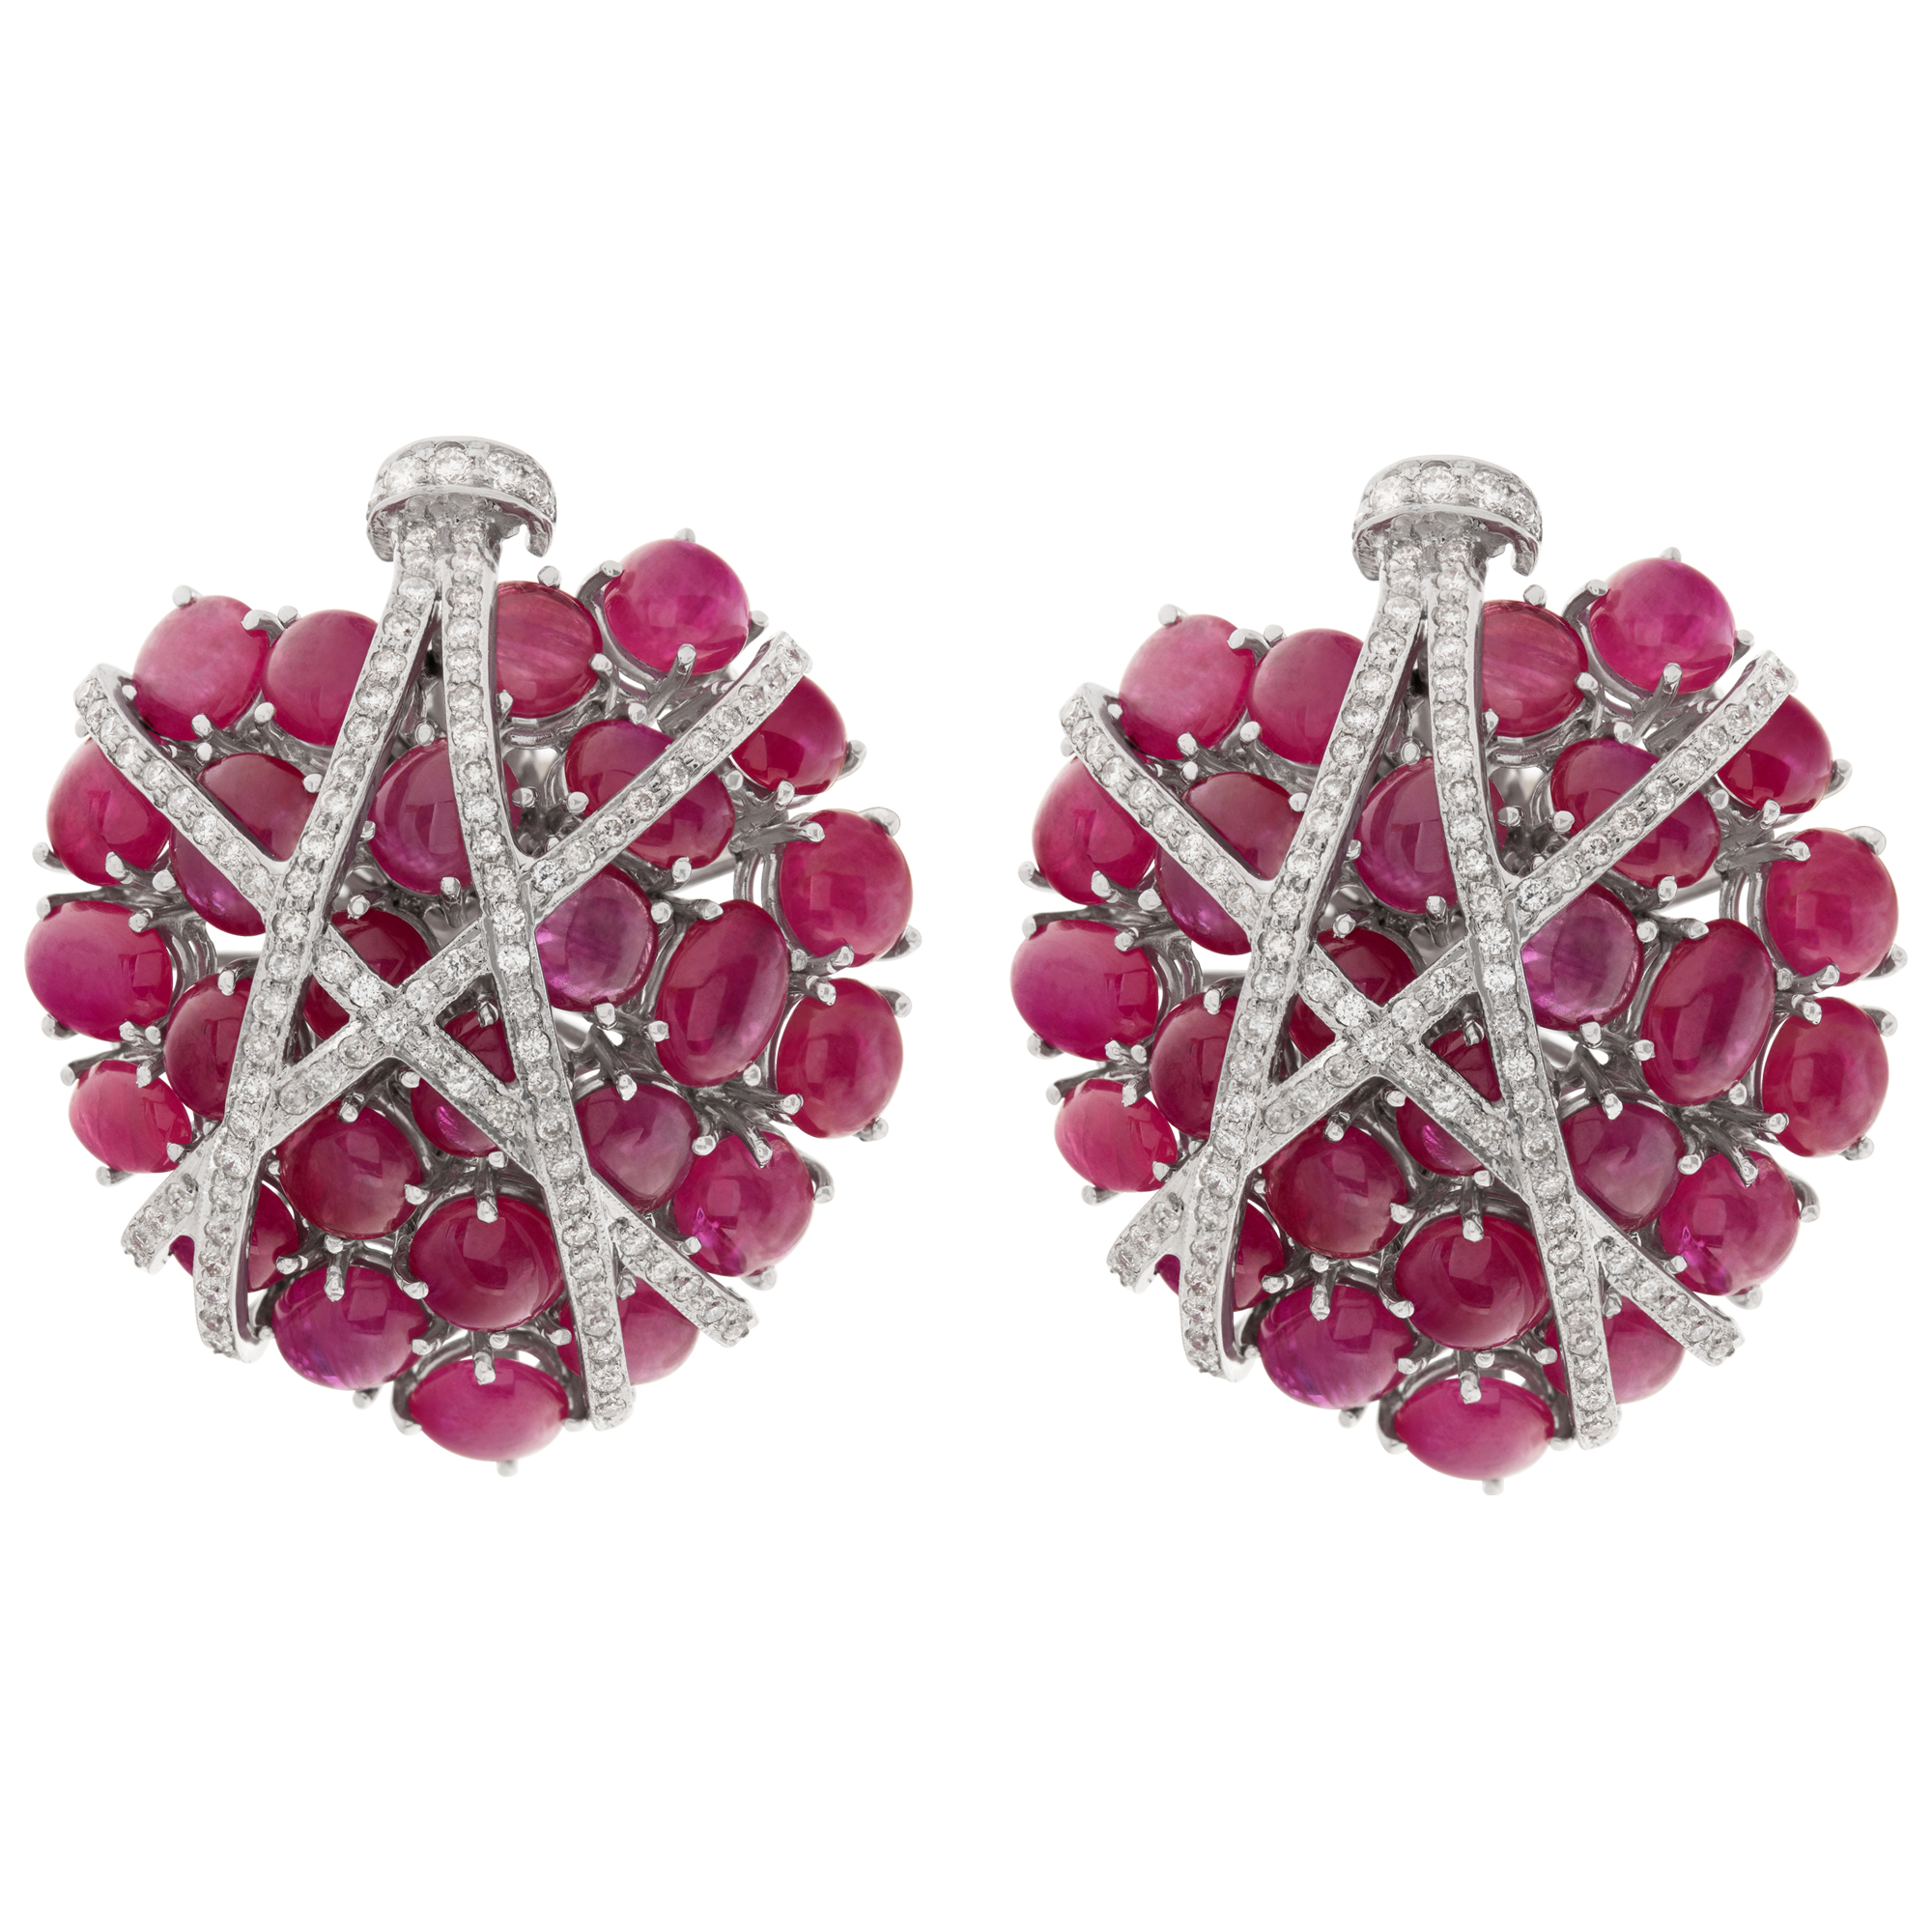 Ruby and diamond earrings in 18k